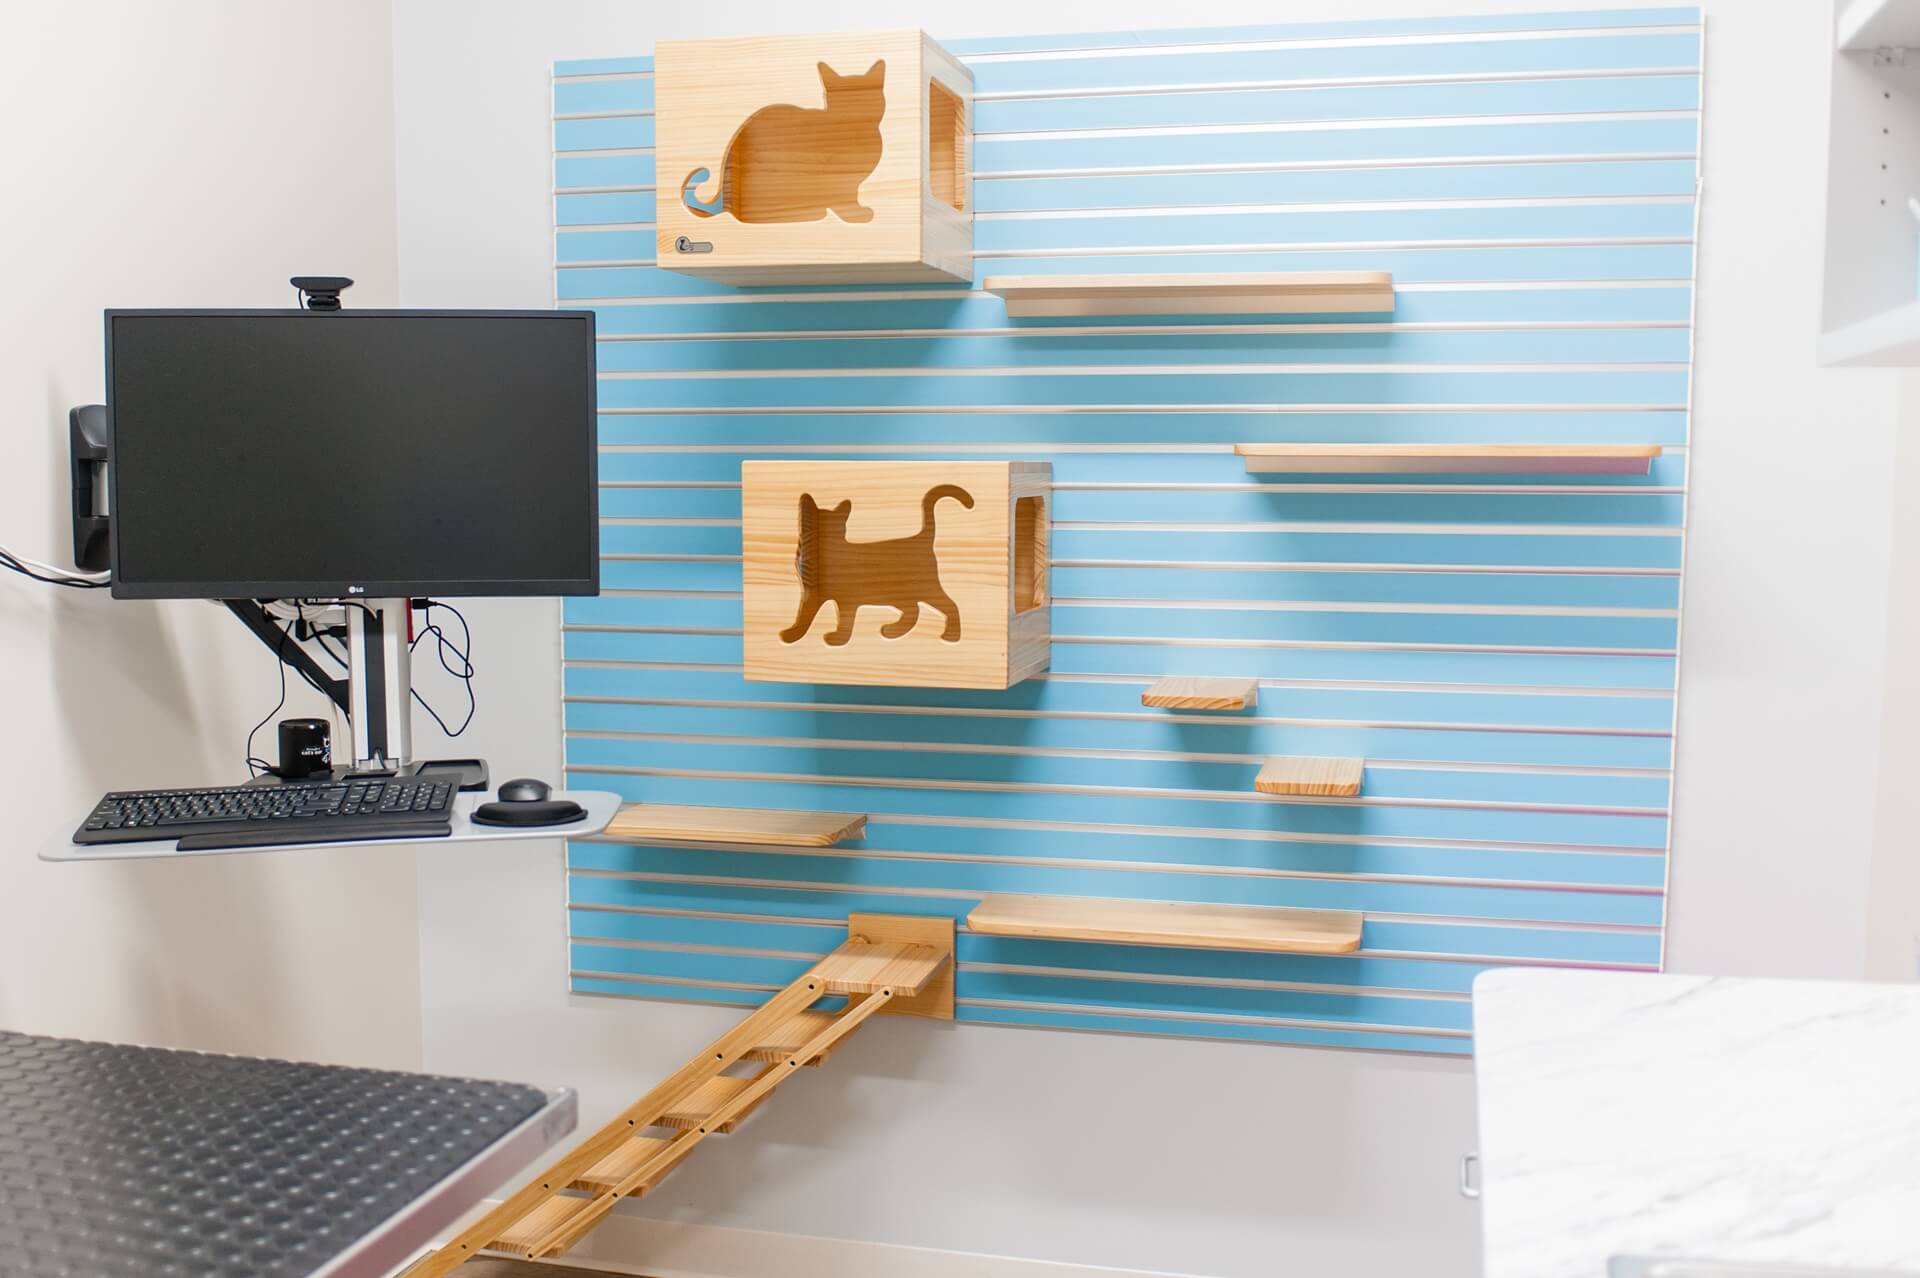 A cat shelves on a wall